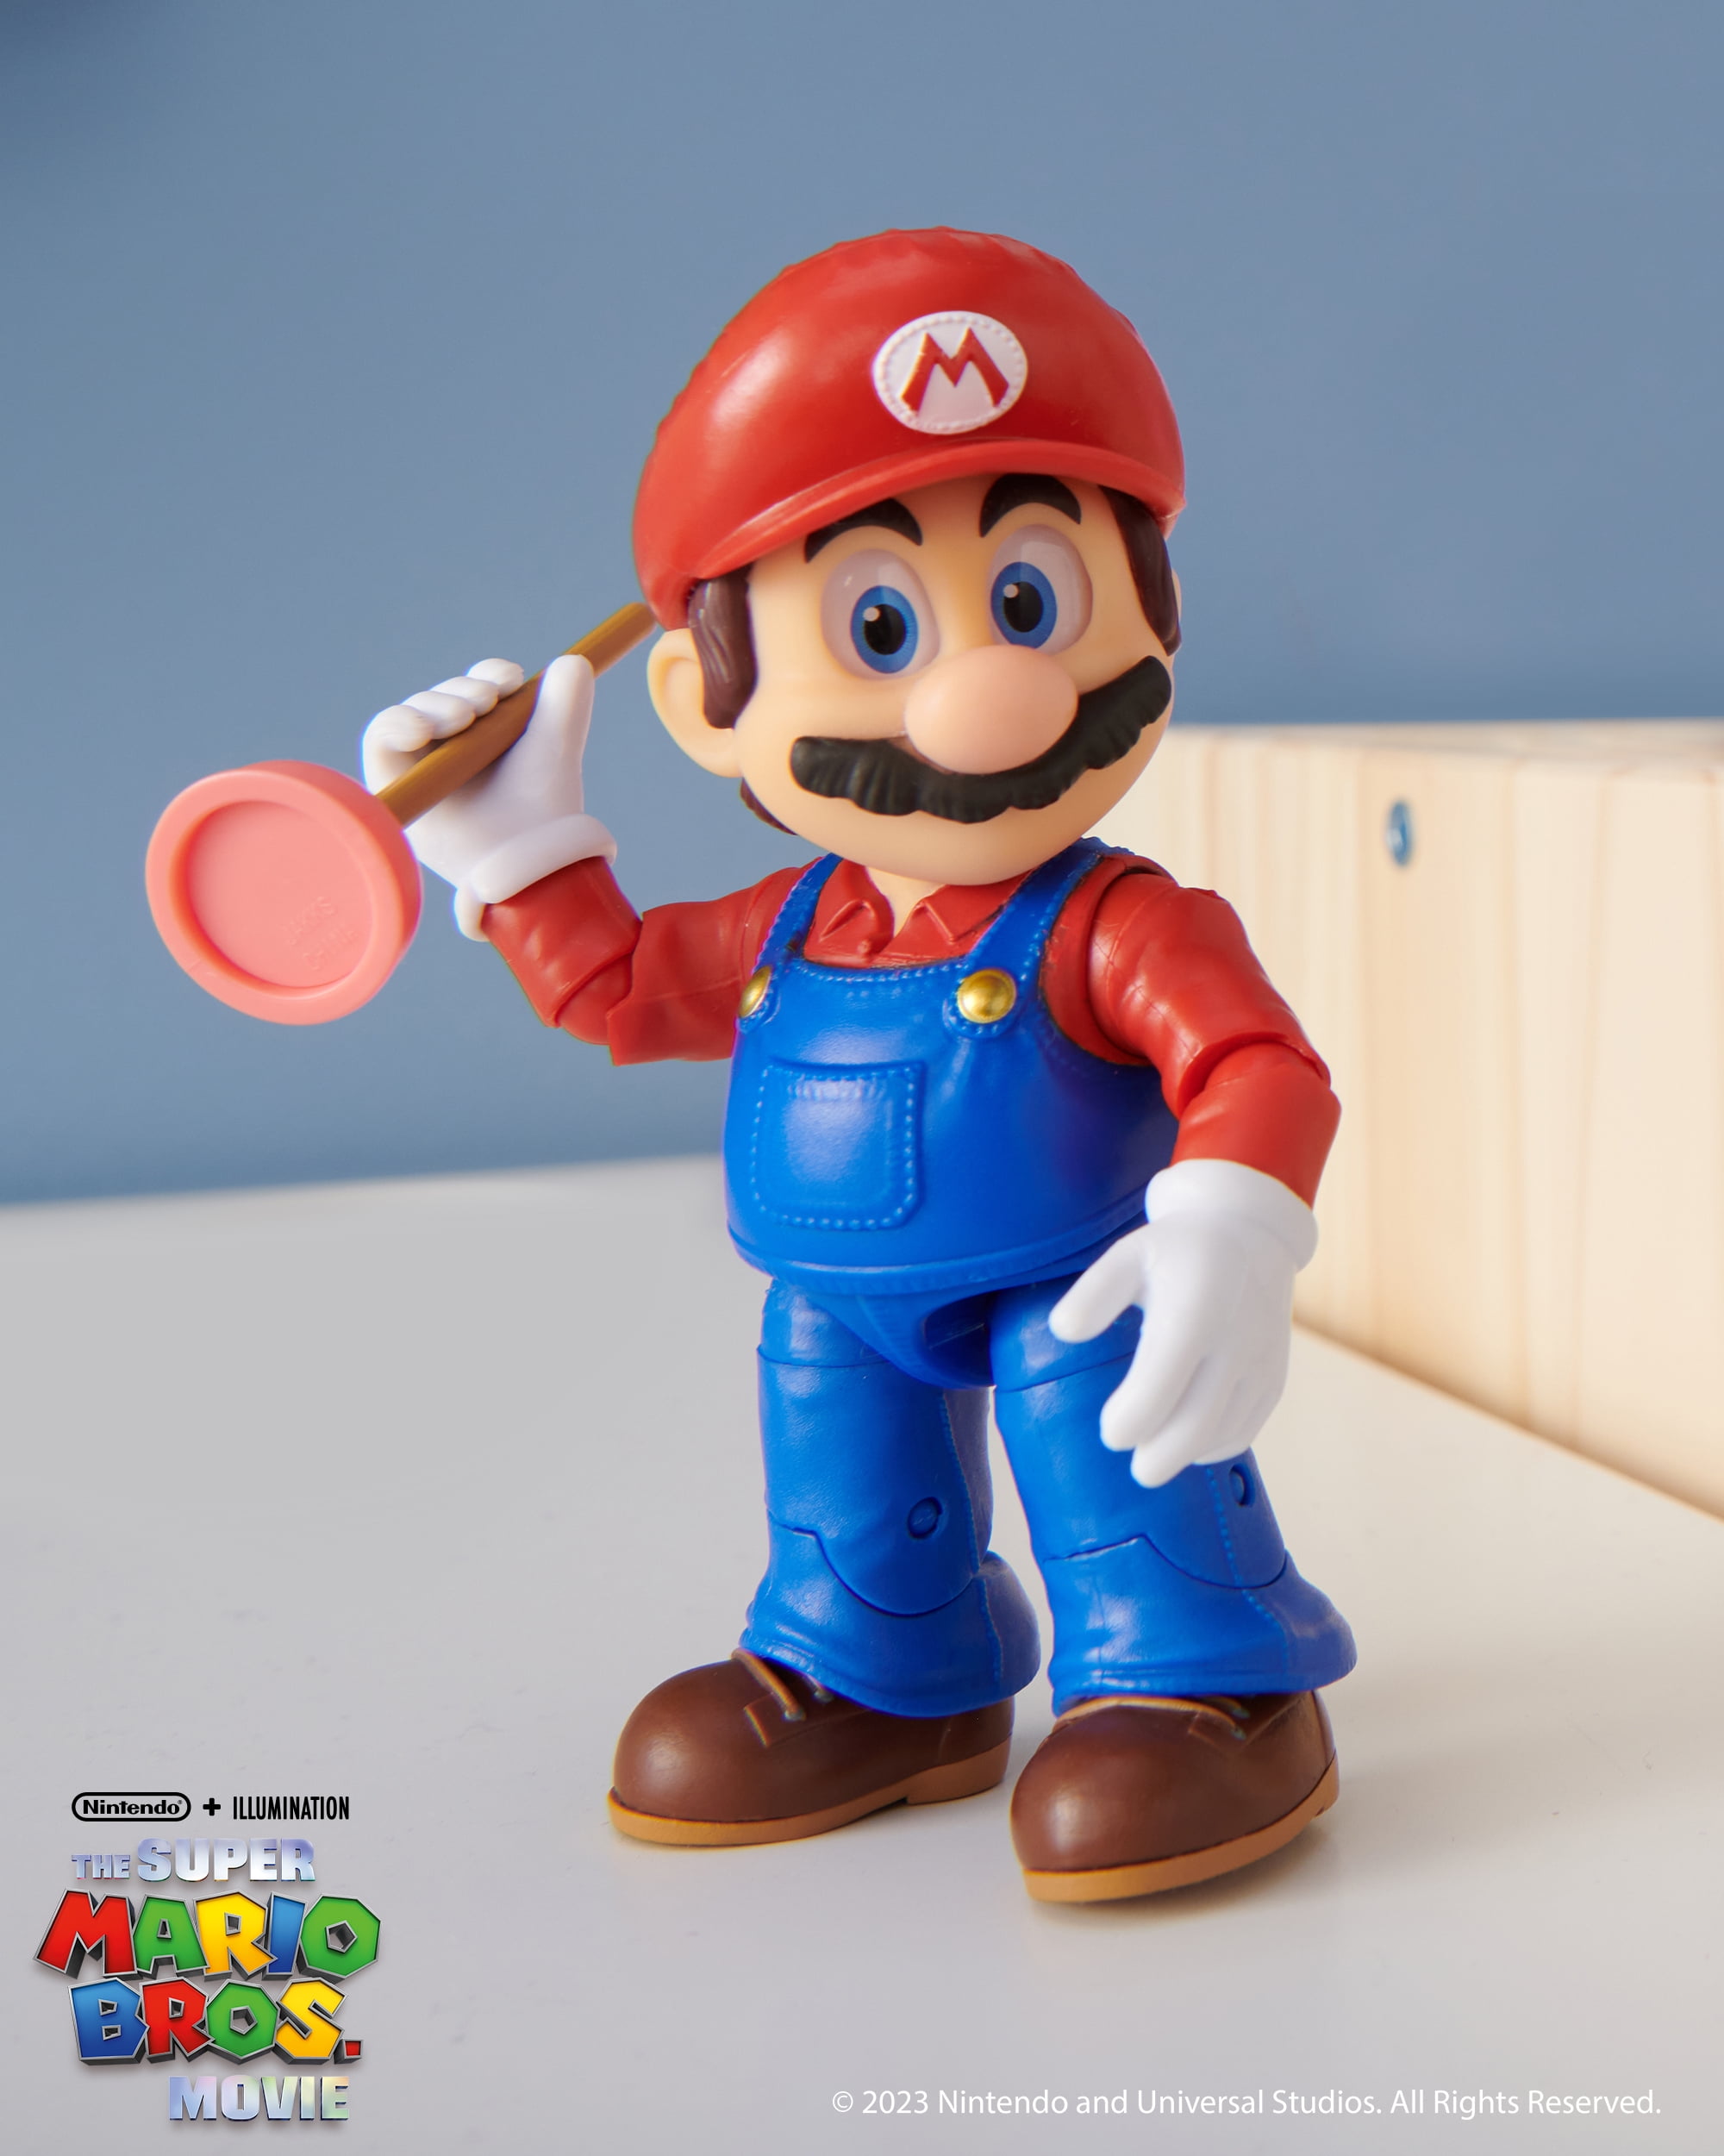 New The Super Mario Bros. Movie Mario Figure with Plunger Nintendo